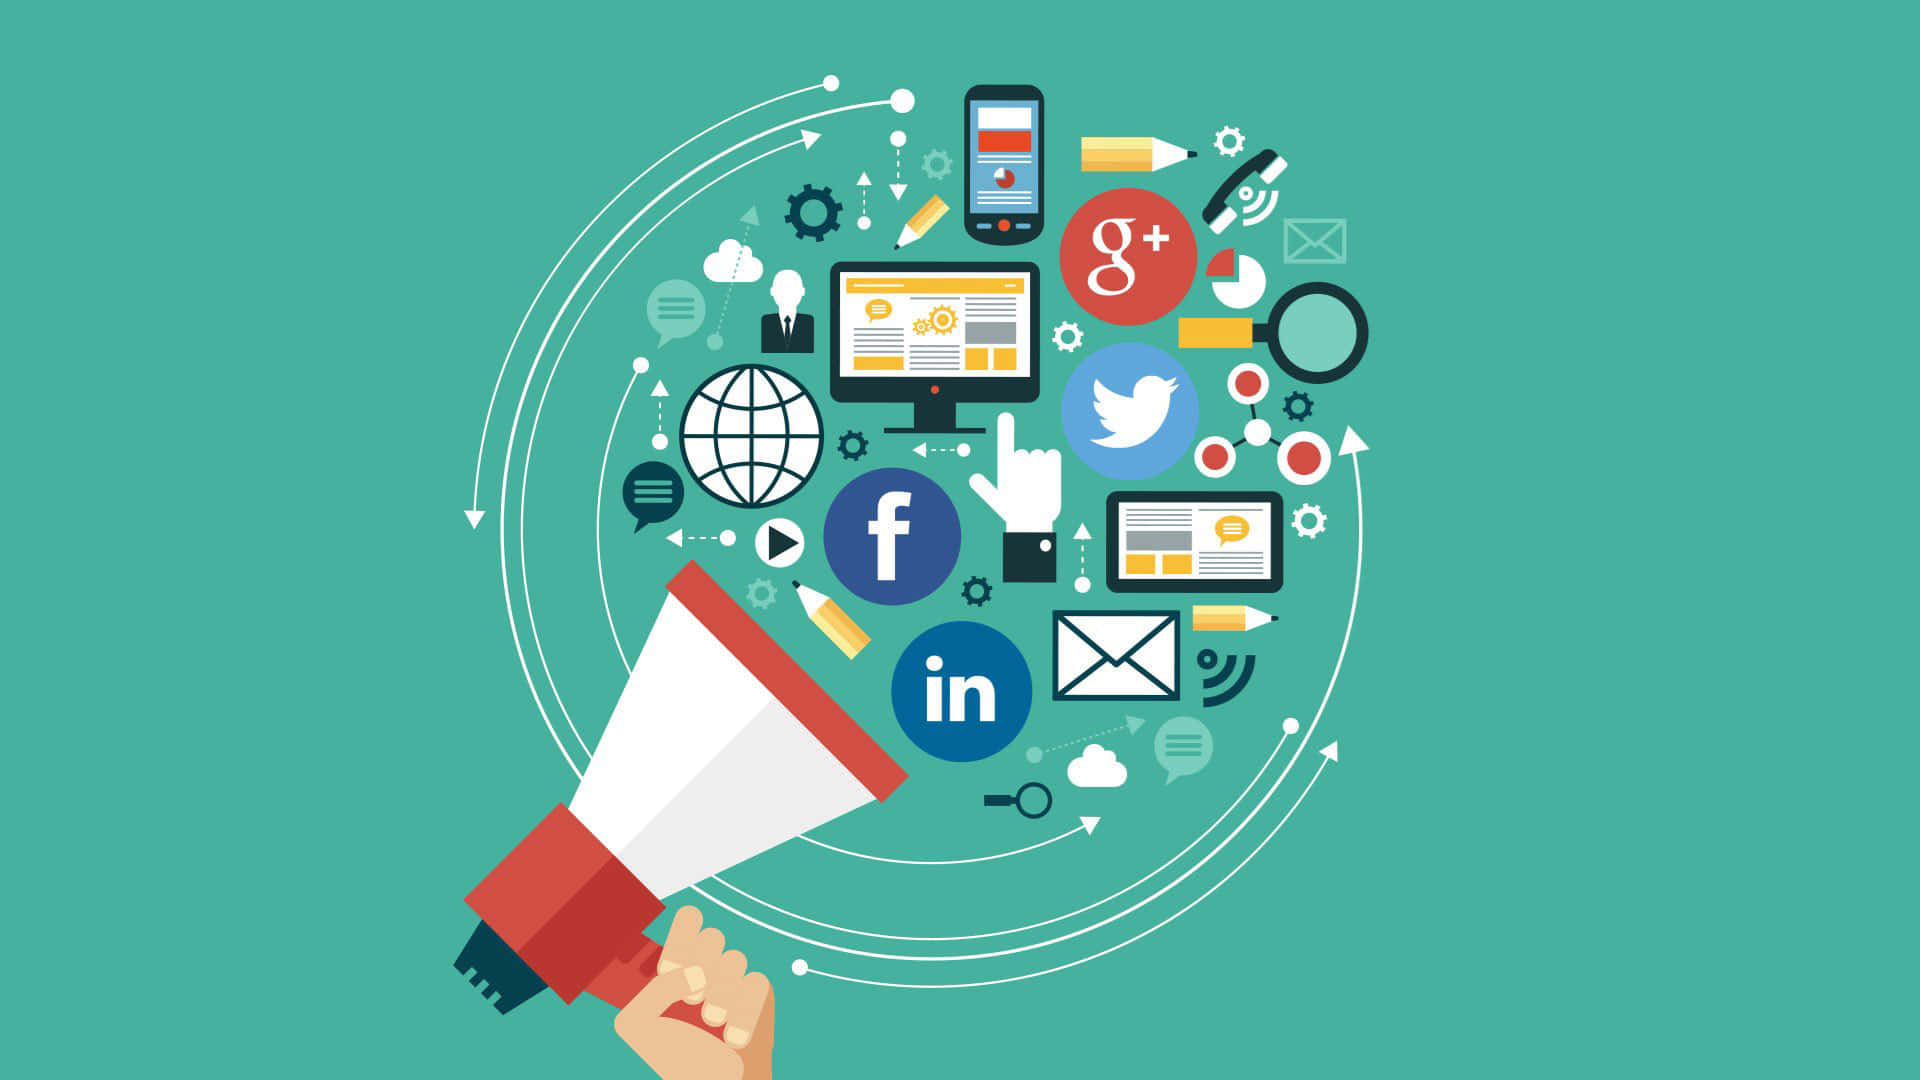 Socialemedier Markedsføring - Hvad Er Det?